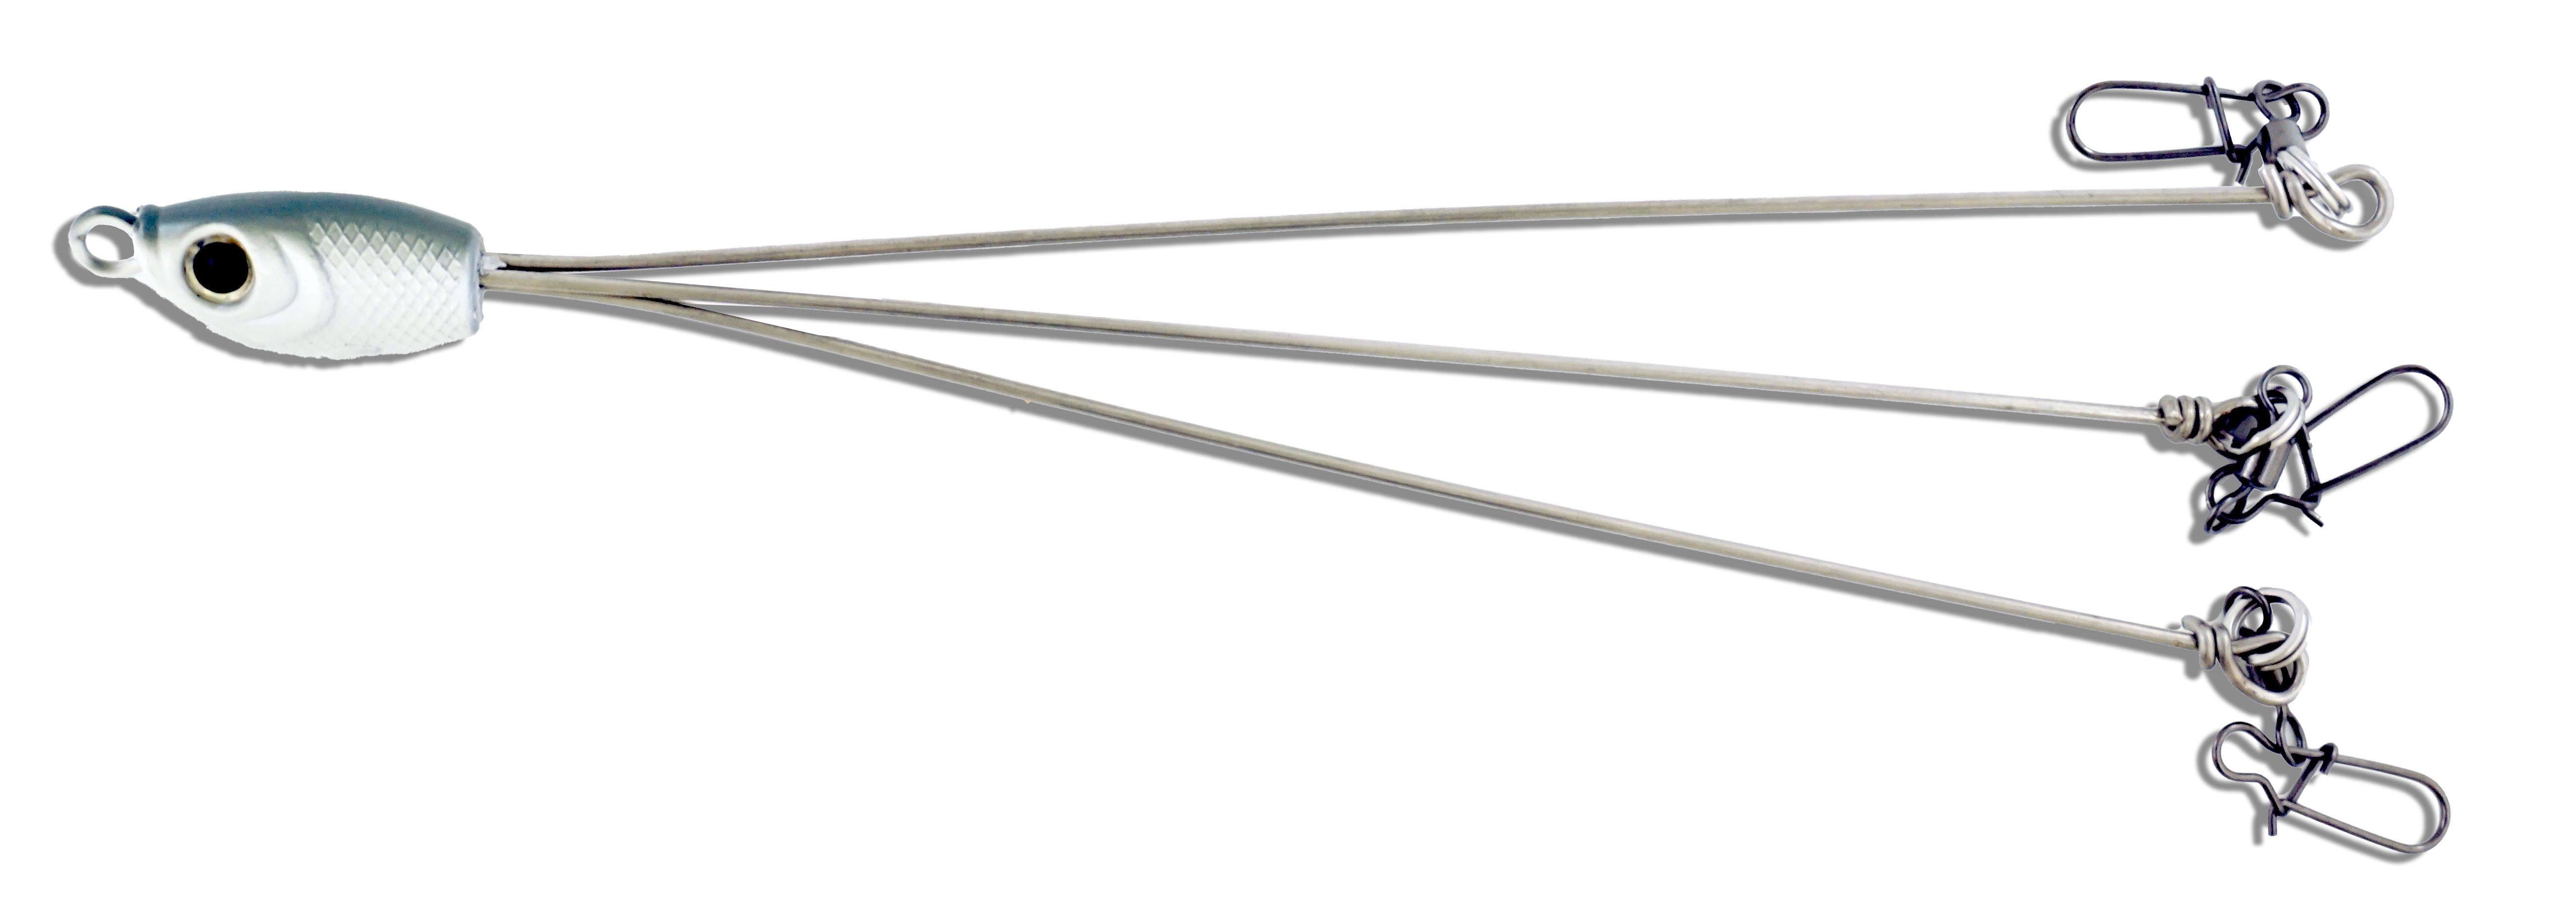 Umbrella Rig 3 Arm with 40g Gray/White Head - Click Image to Close